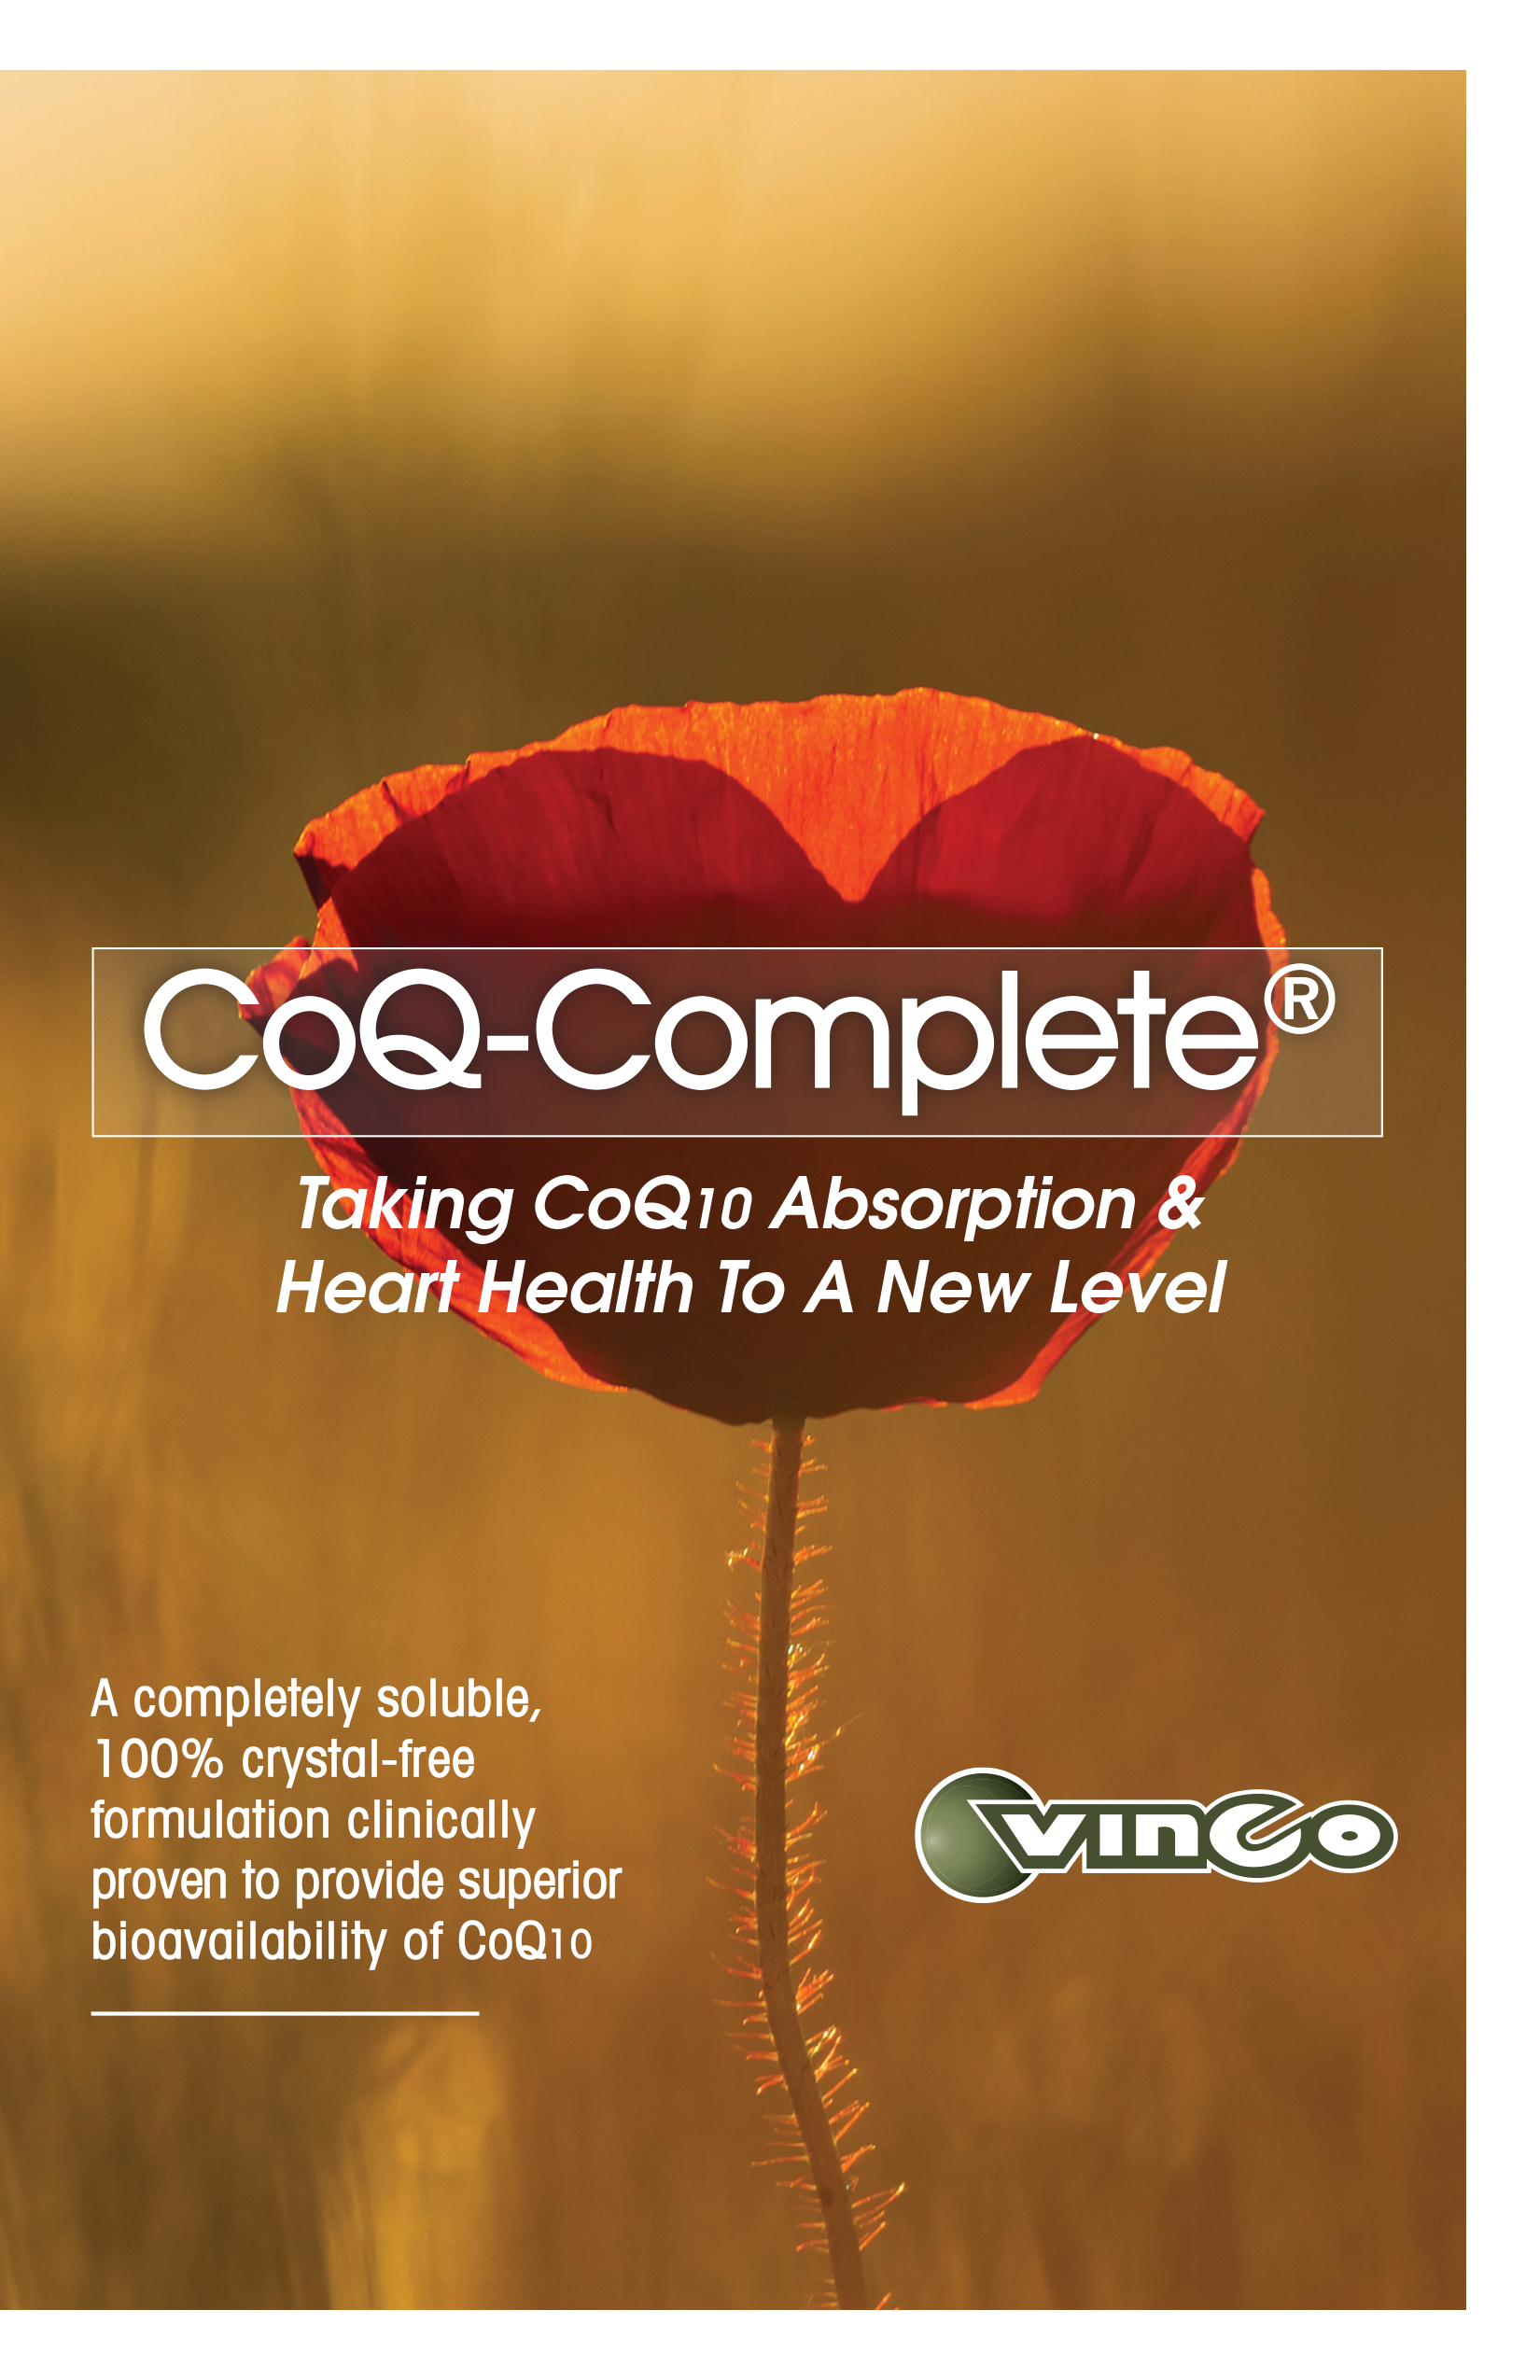 CoQ Complete Brochure-1.png